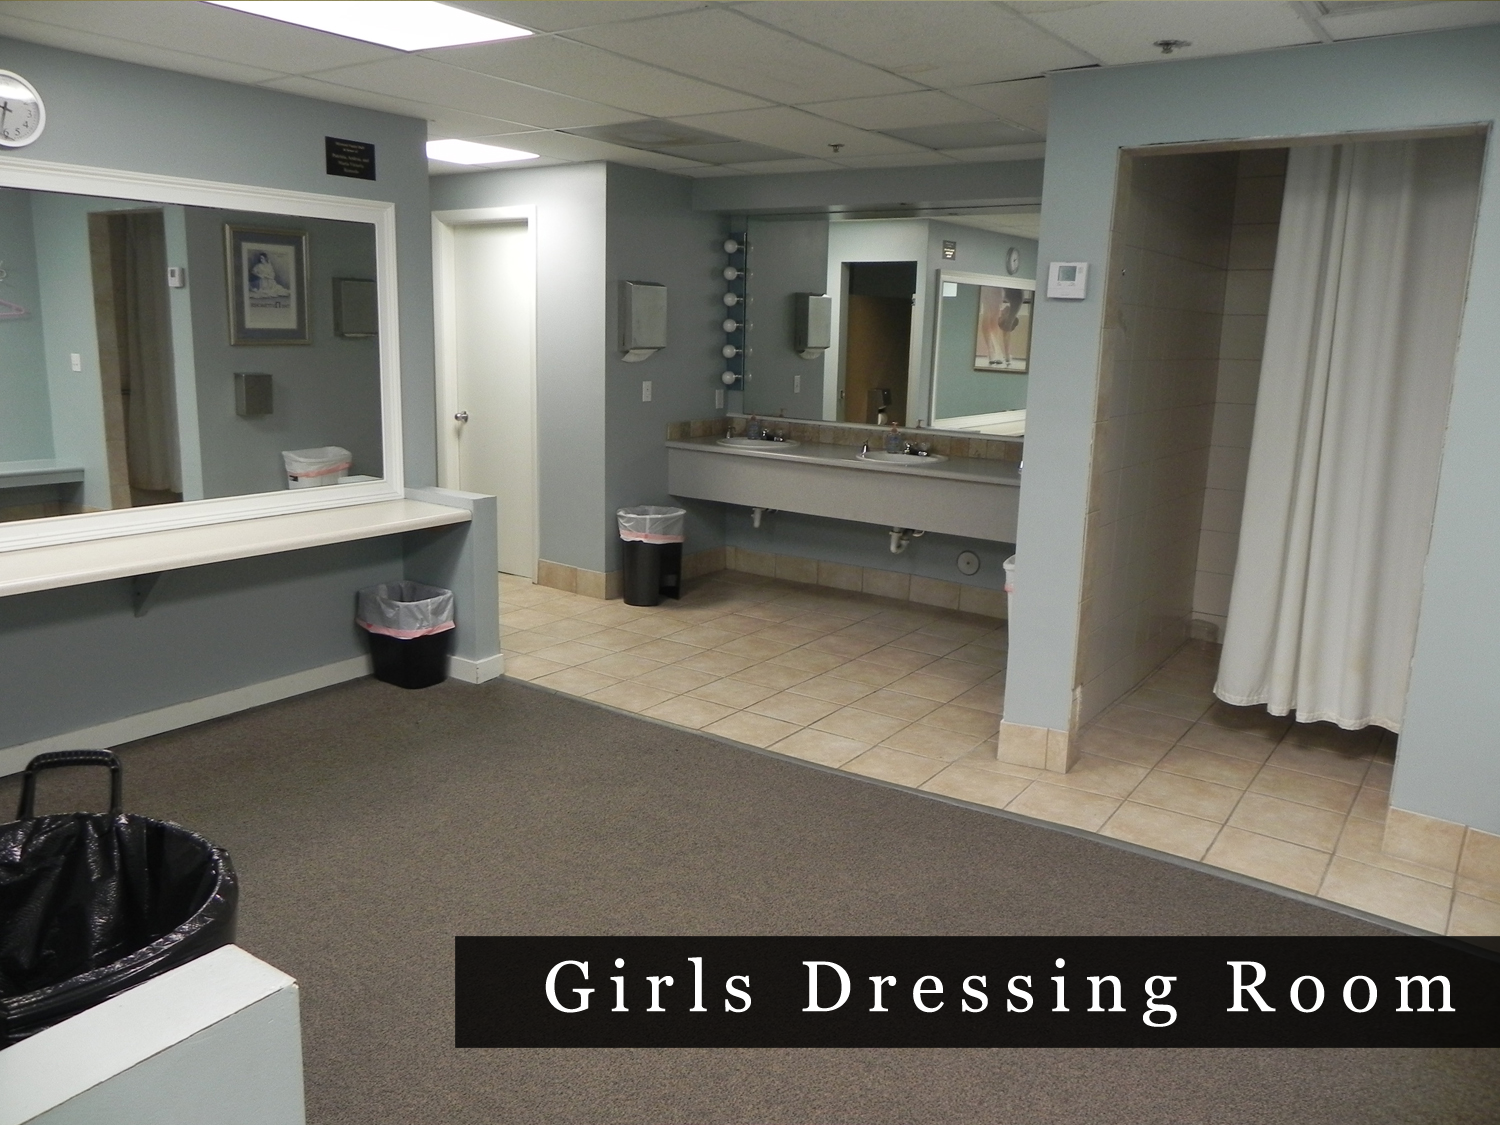 Boca Ballet Theatre's Girls Dressing Room